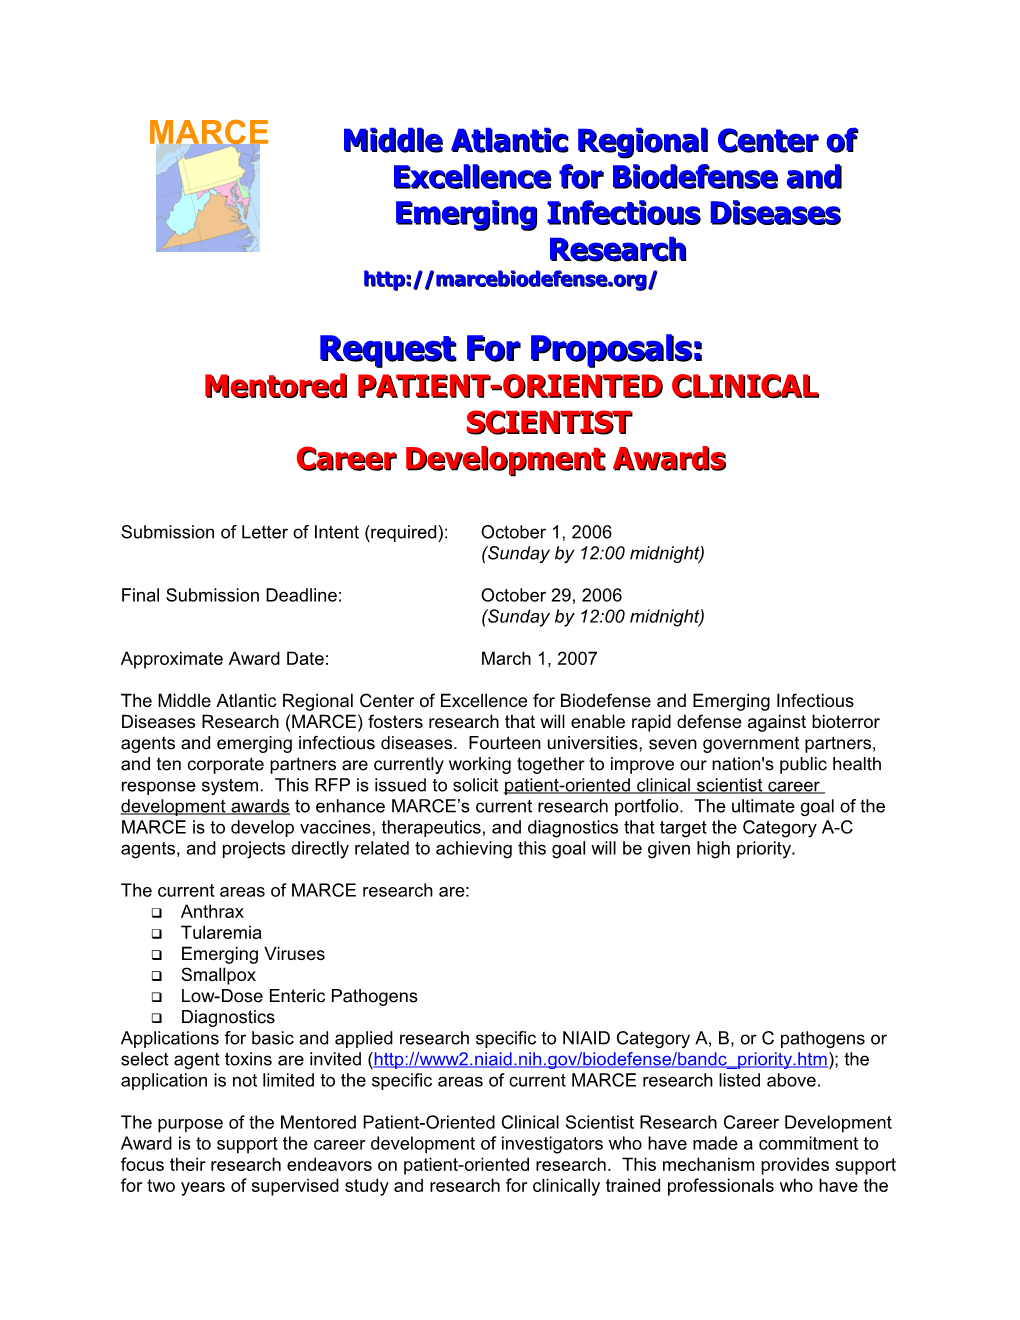 Mentored Patient-Oriented Research Career Development Award (K23)